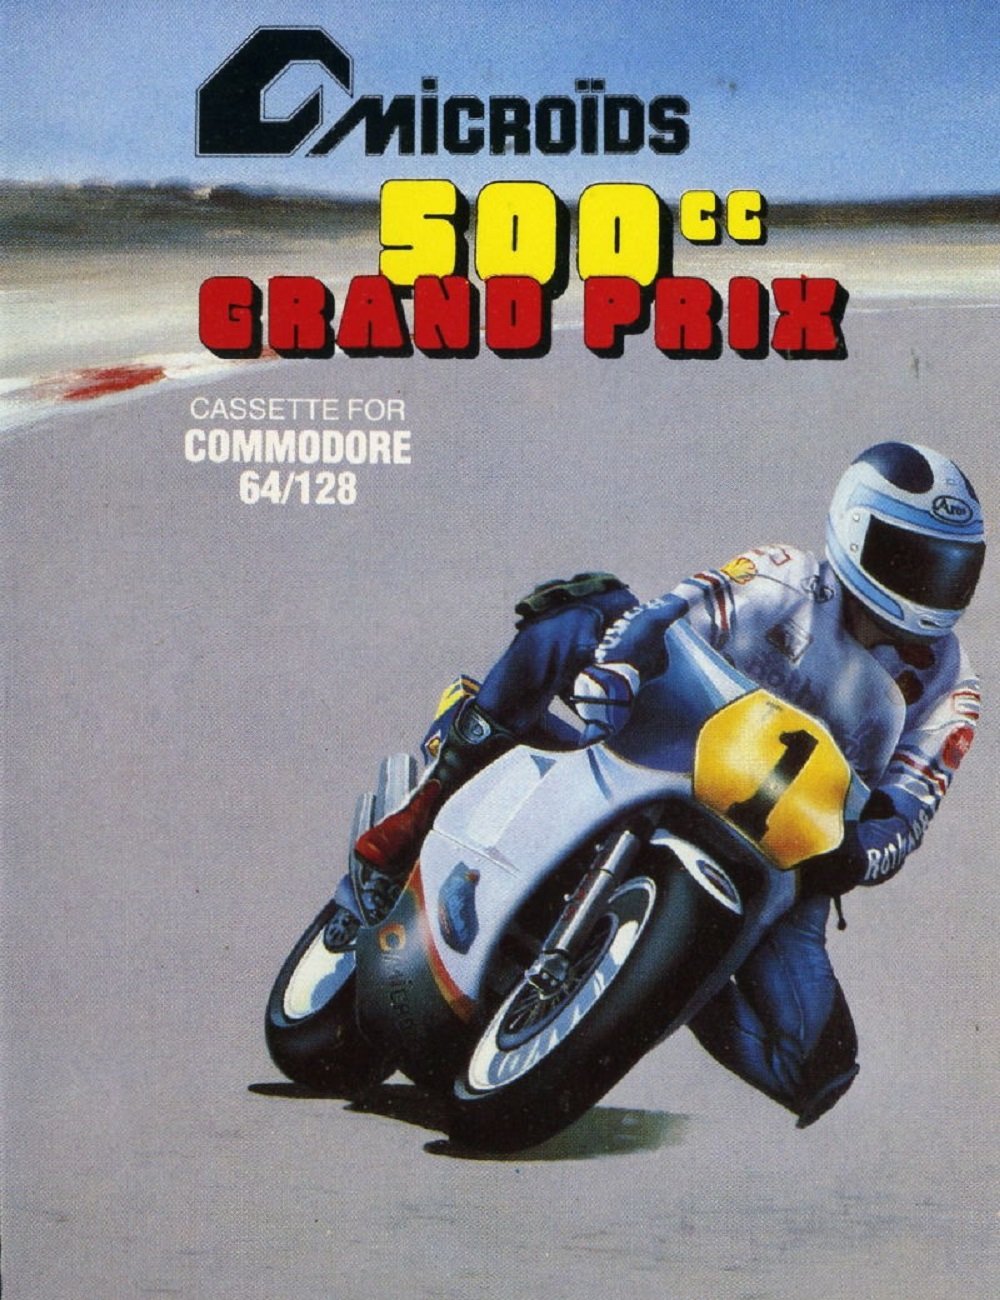 Image of Grand Prix 500 cc